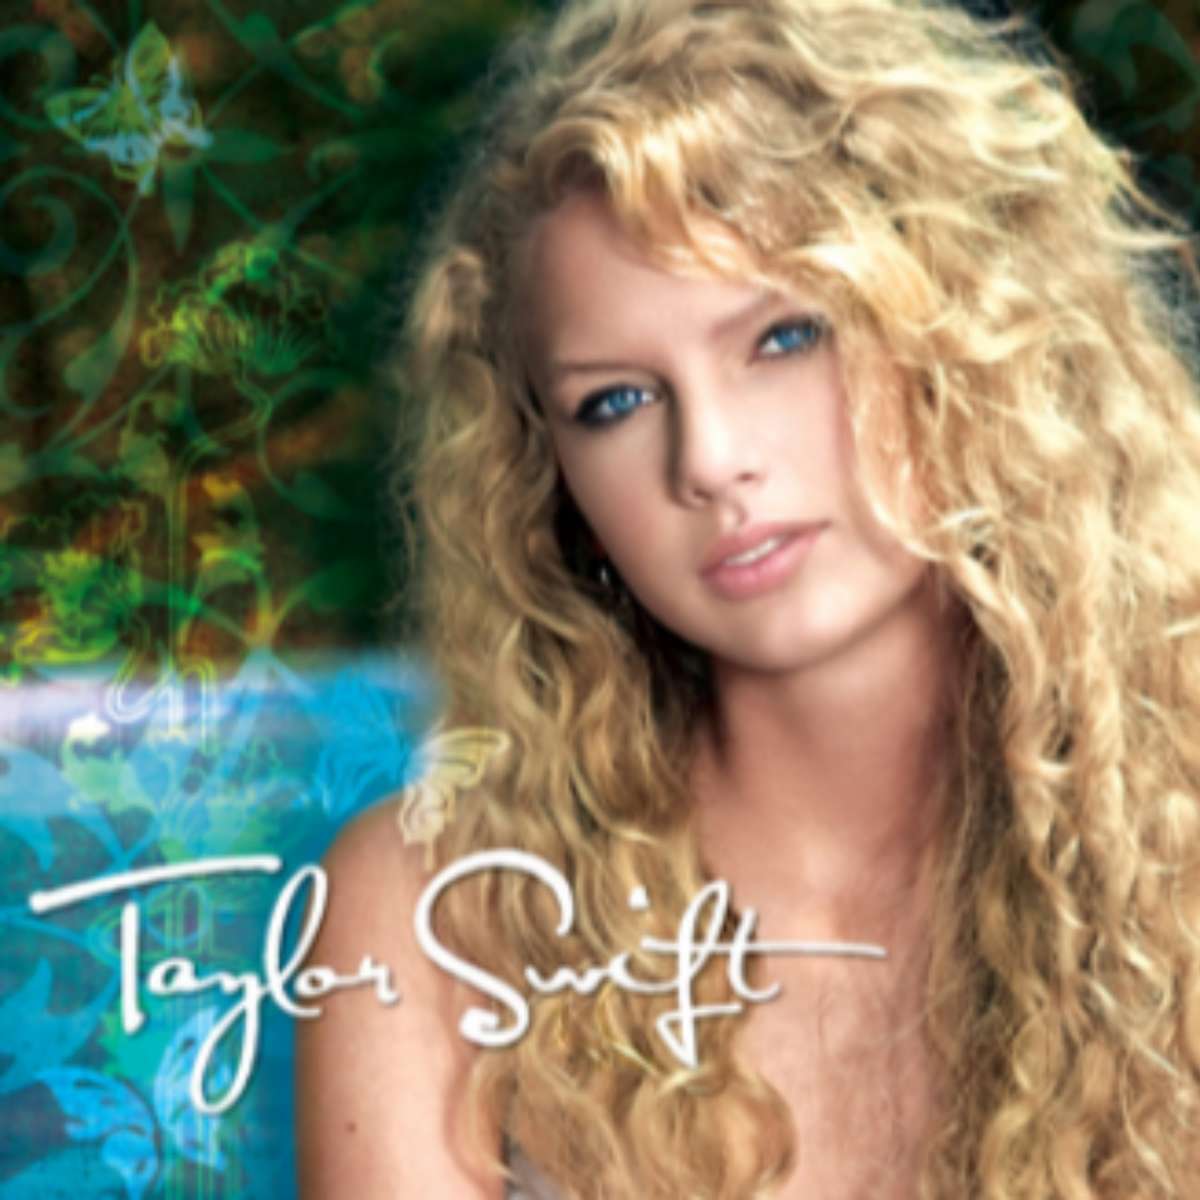 Taylor Swift Debut album cover online puzzle